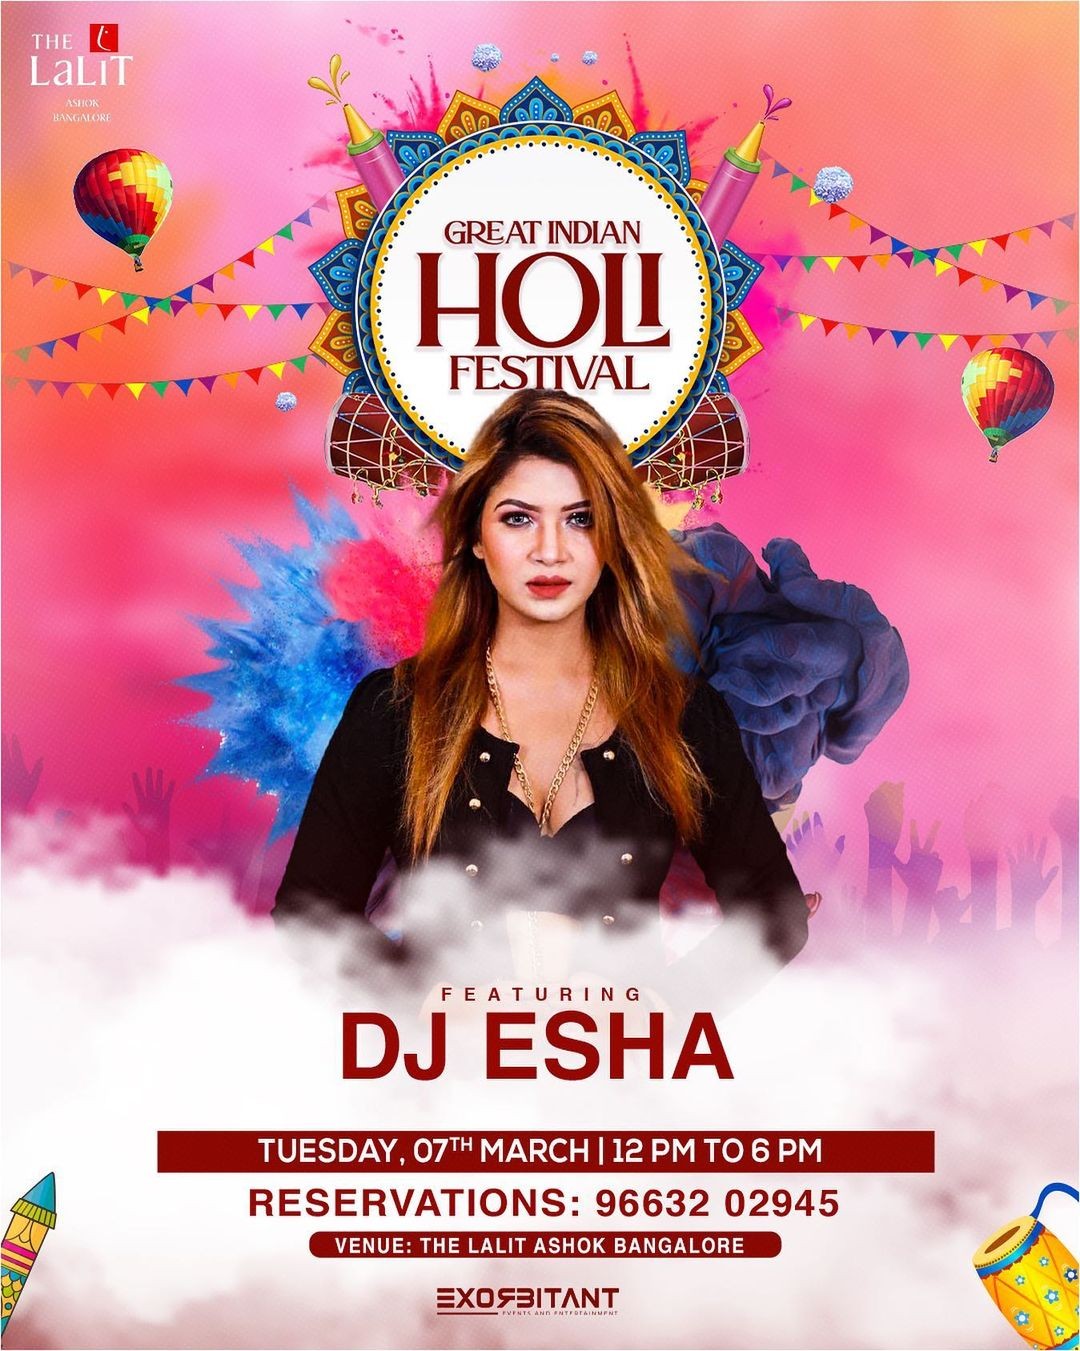 Great Indian Holi Festival - DJ Esha